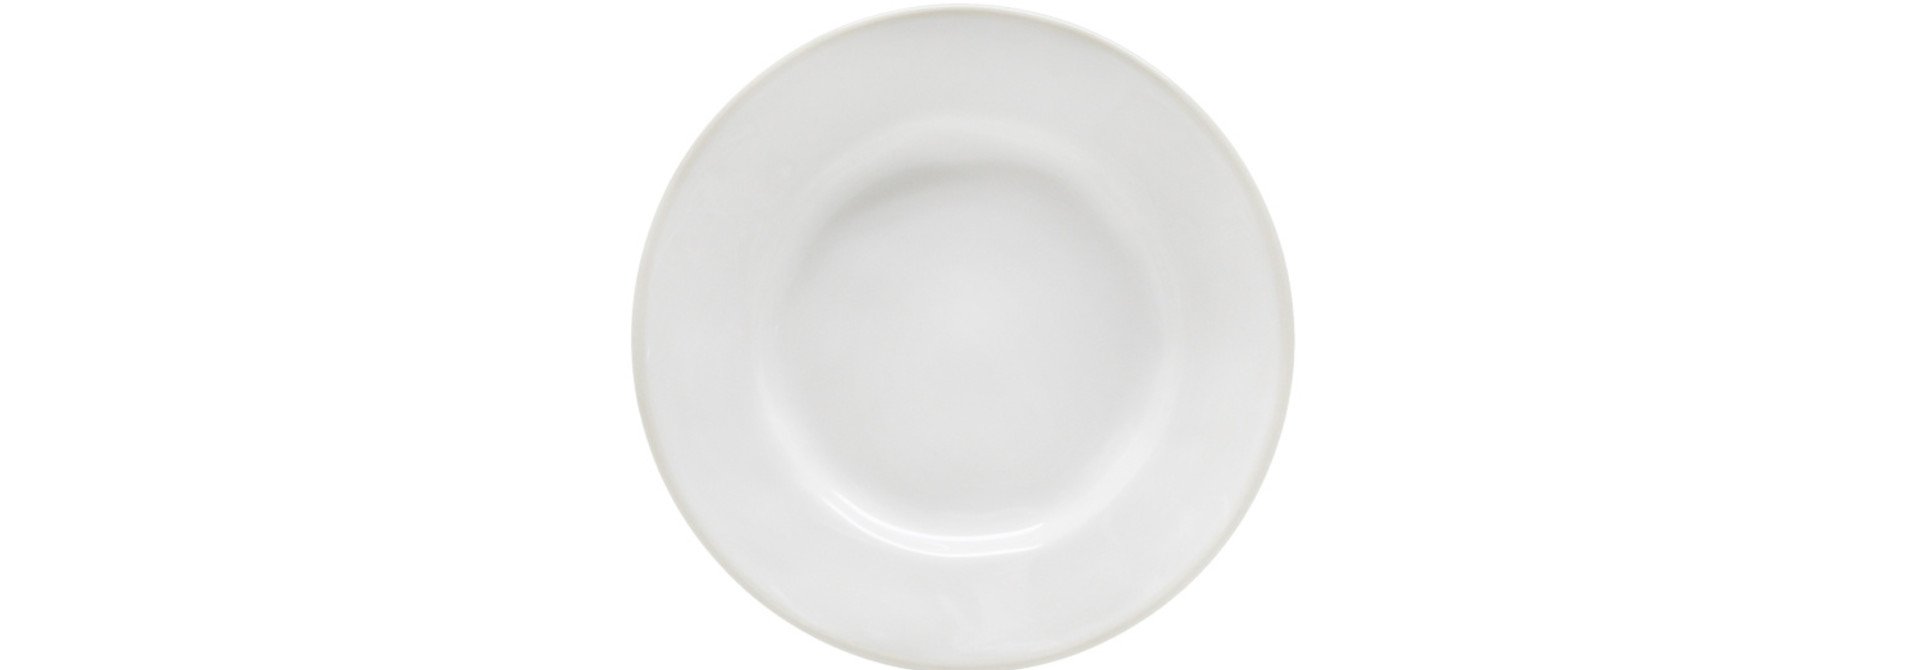 Beja | The White & Cream Dinnerware Collection